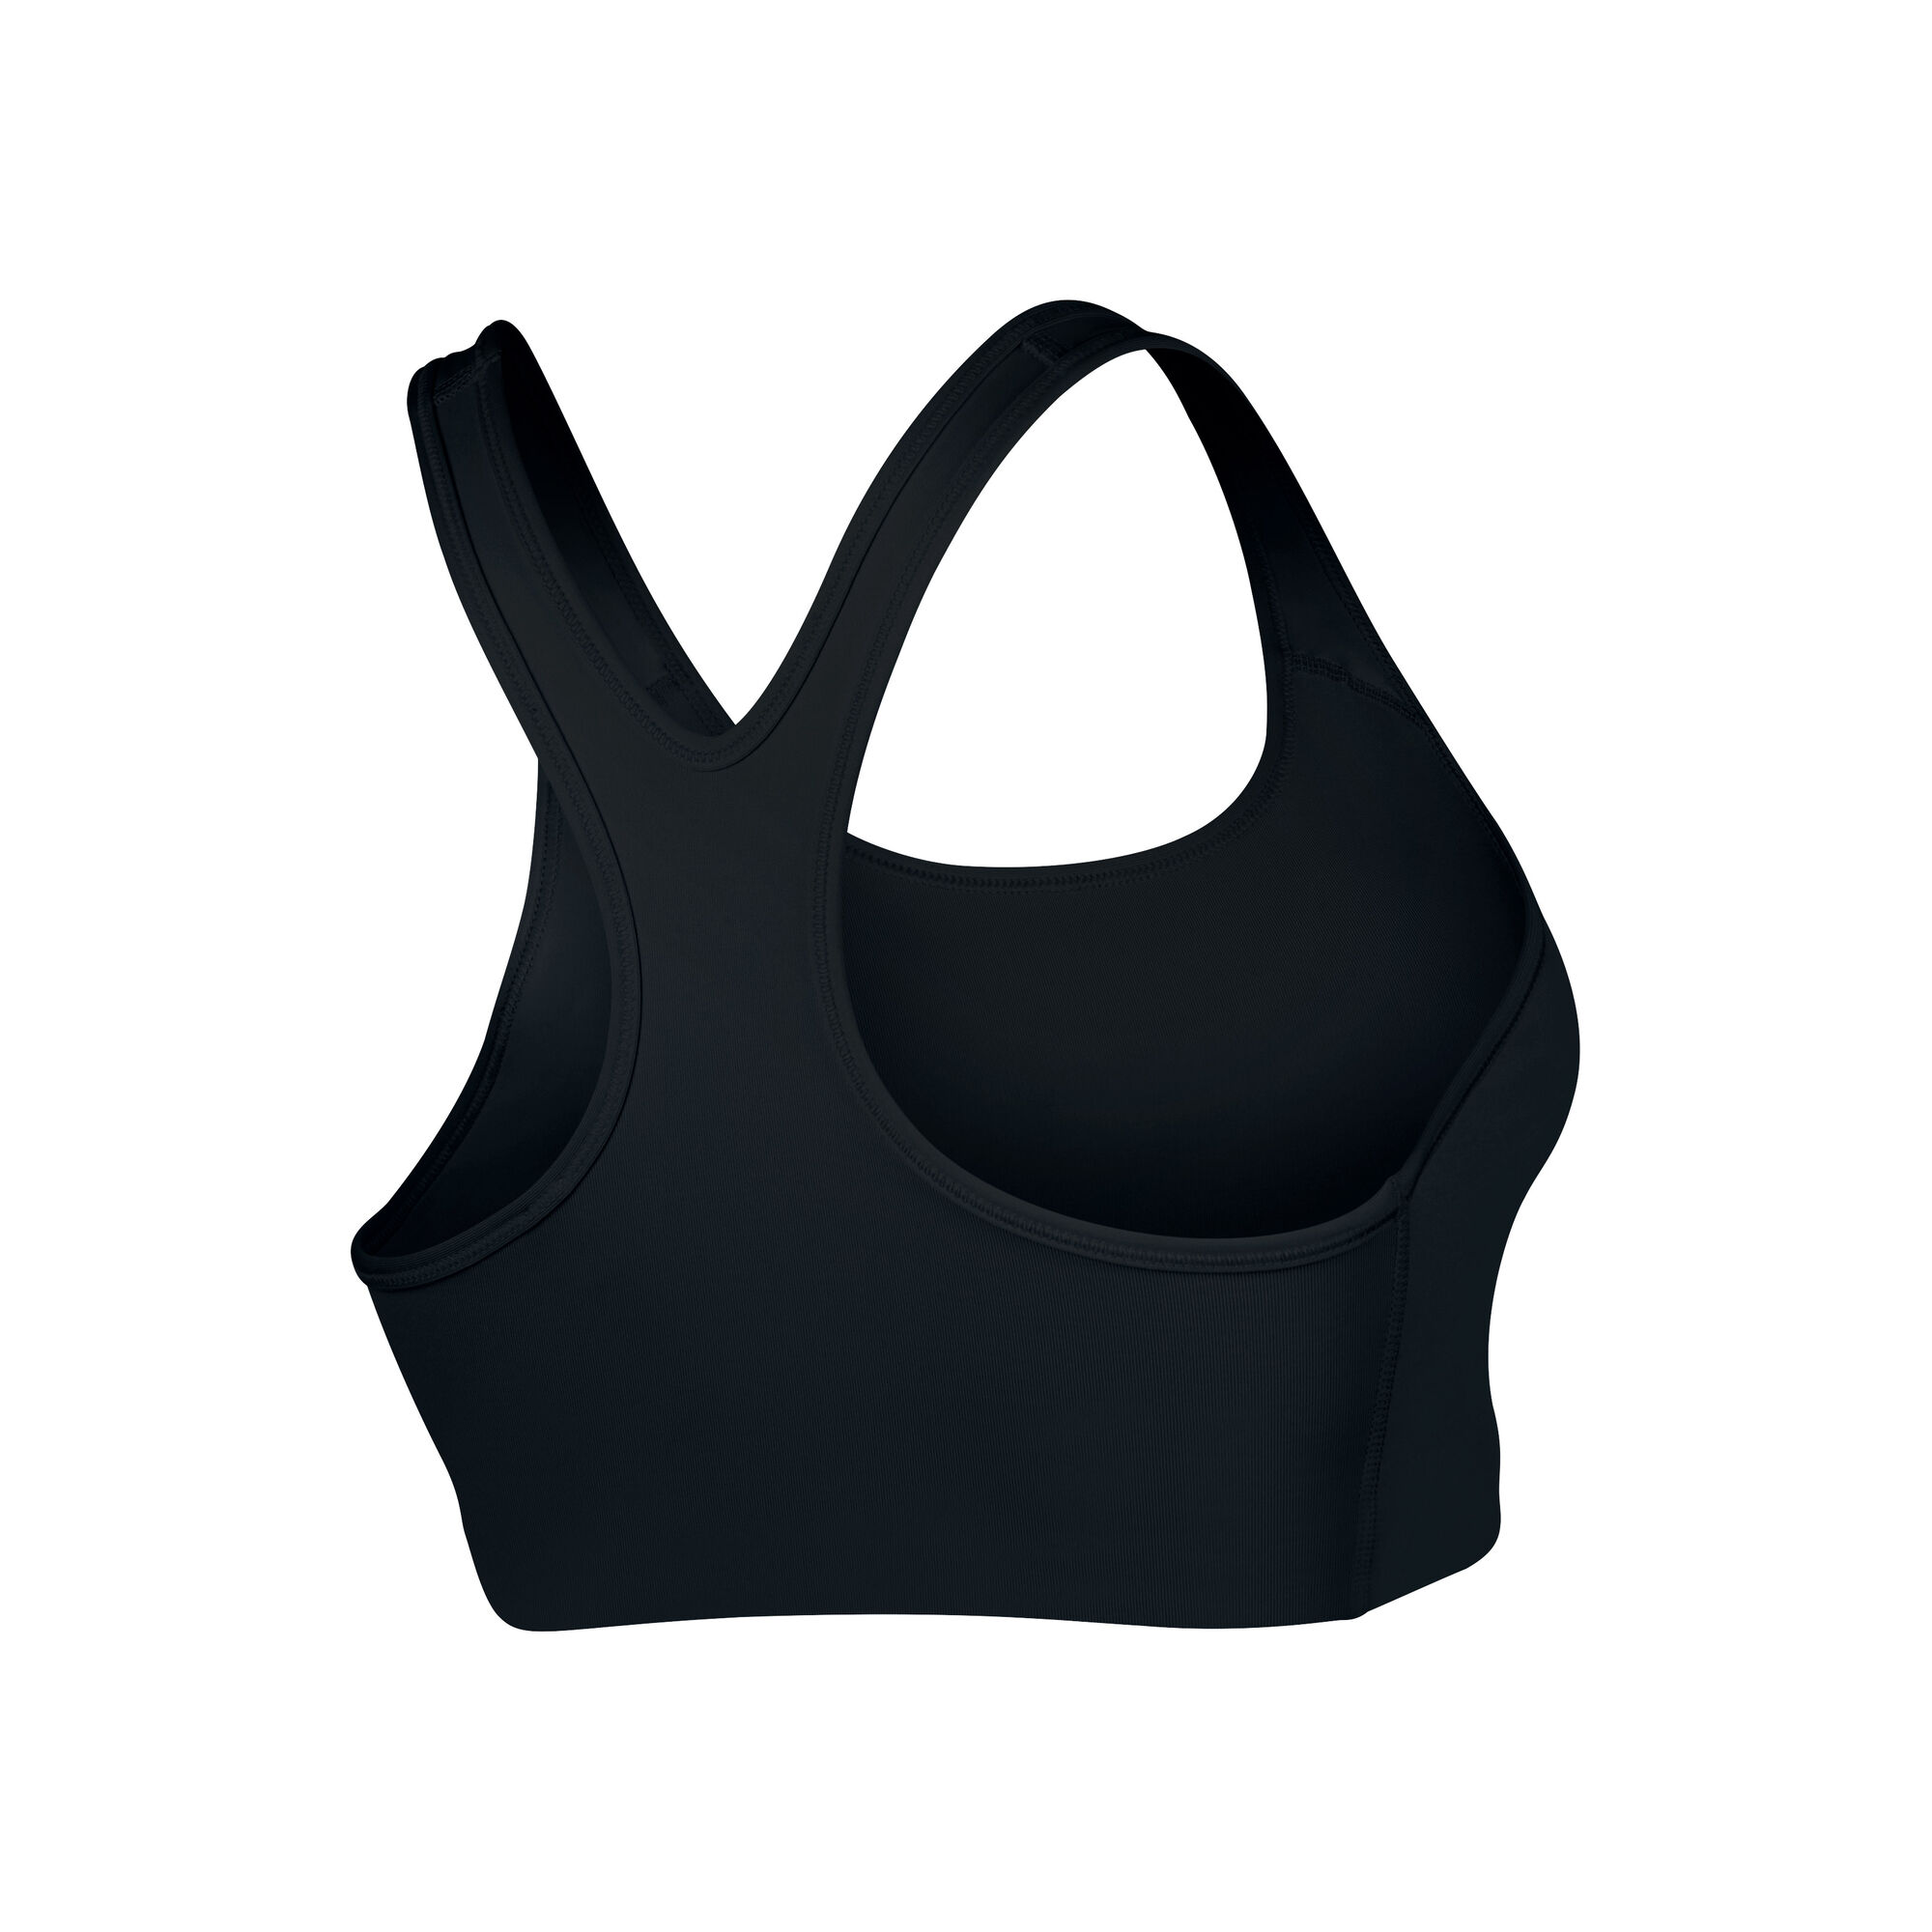 Nike Women's Training Pro Rival Sports Bra 34D, Black, 34D